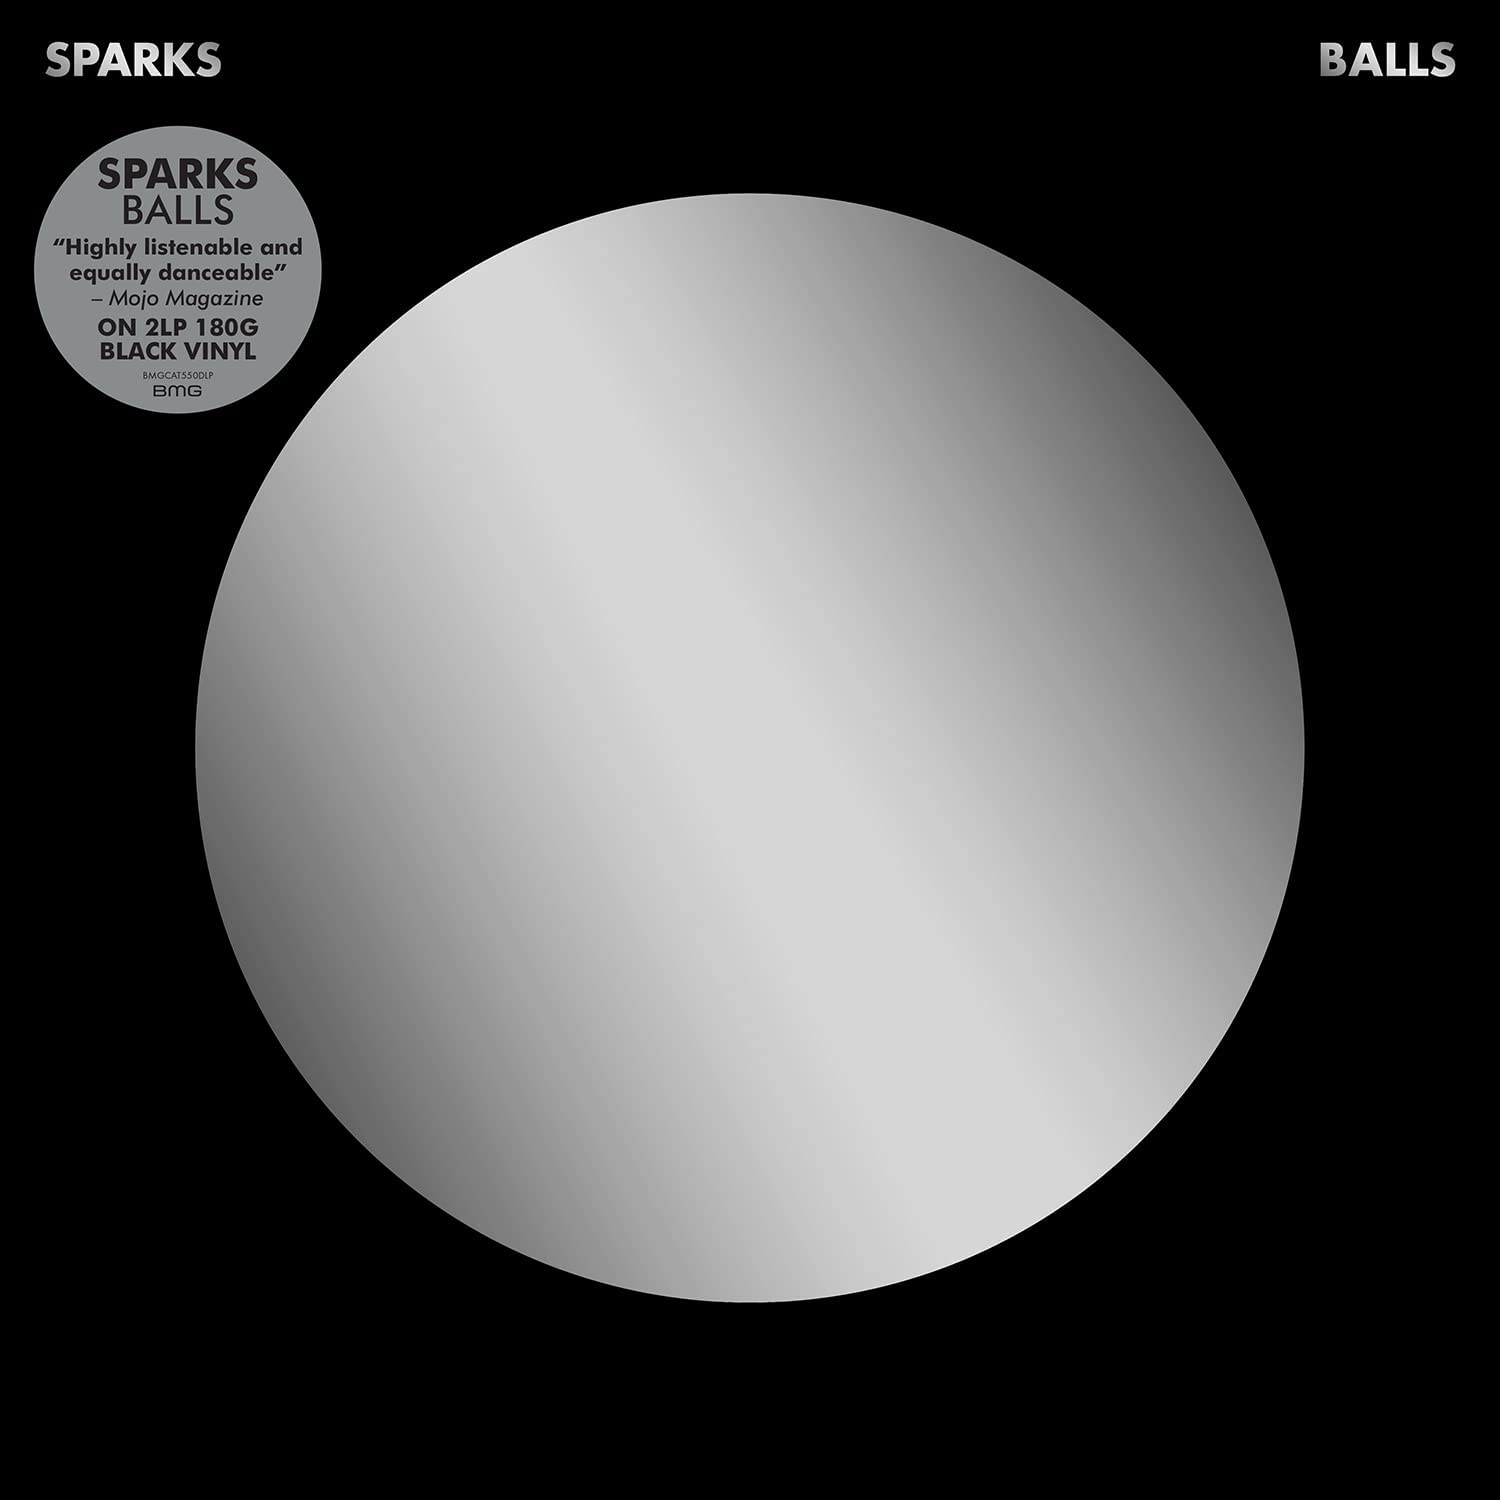 Copertina Vinile 33 giri Balls di Sparks